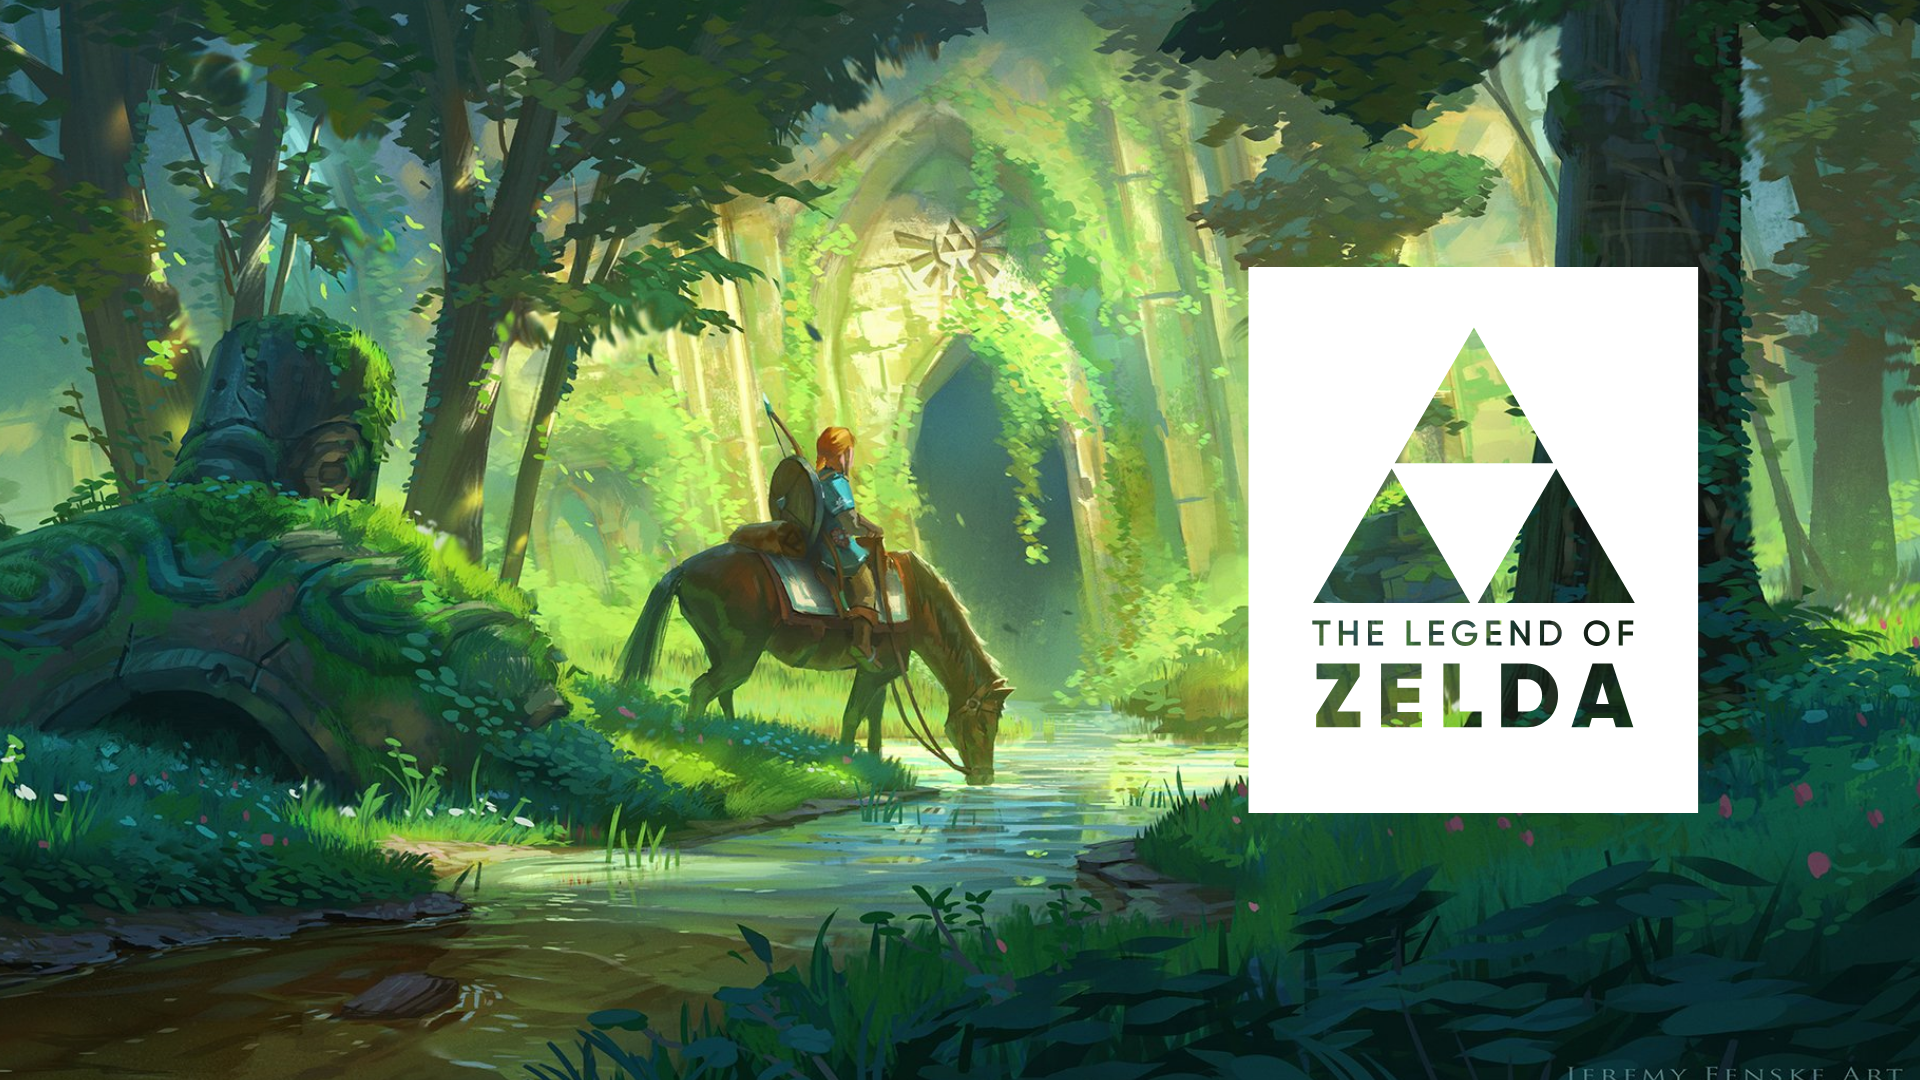 General 1920x1080 Link The Legend of Zelda The Legend of Zelda: Breath of the Wild artwork horse river green video games video game characters